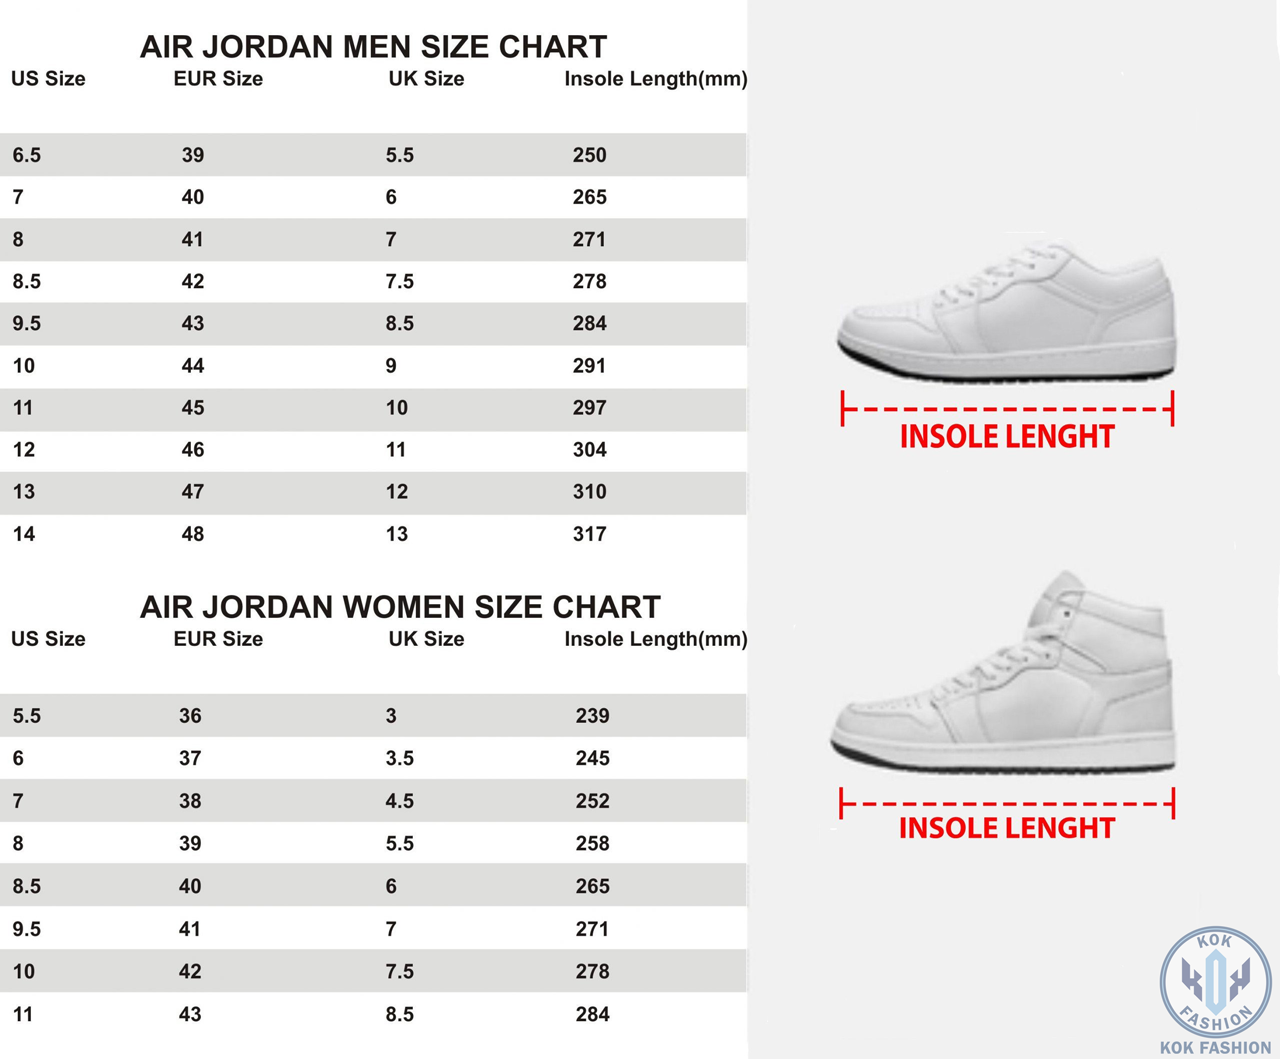 Air Jordan High Top Shoes Kokfashion Kokfashion.com